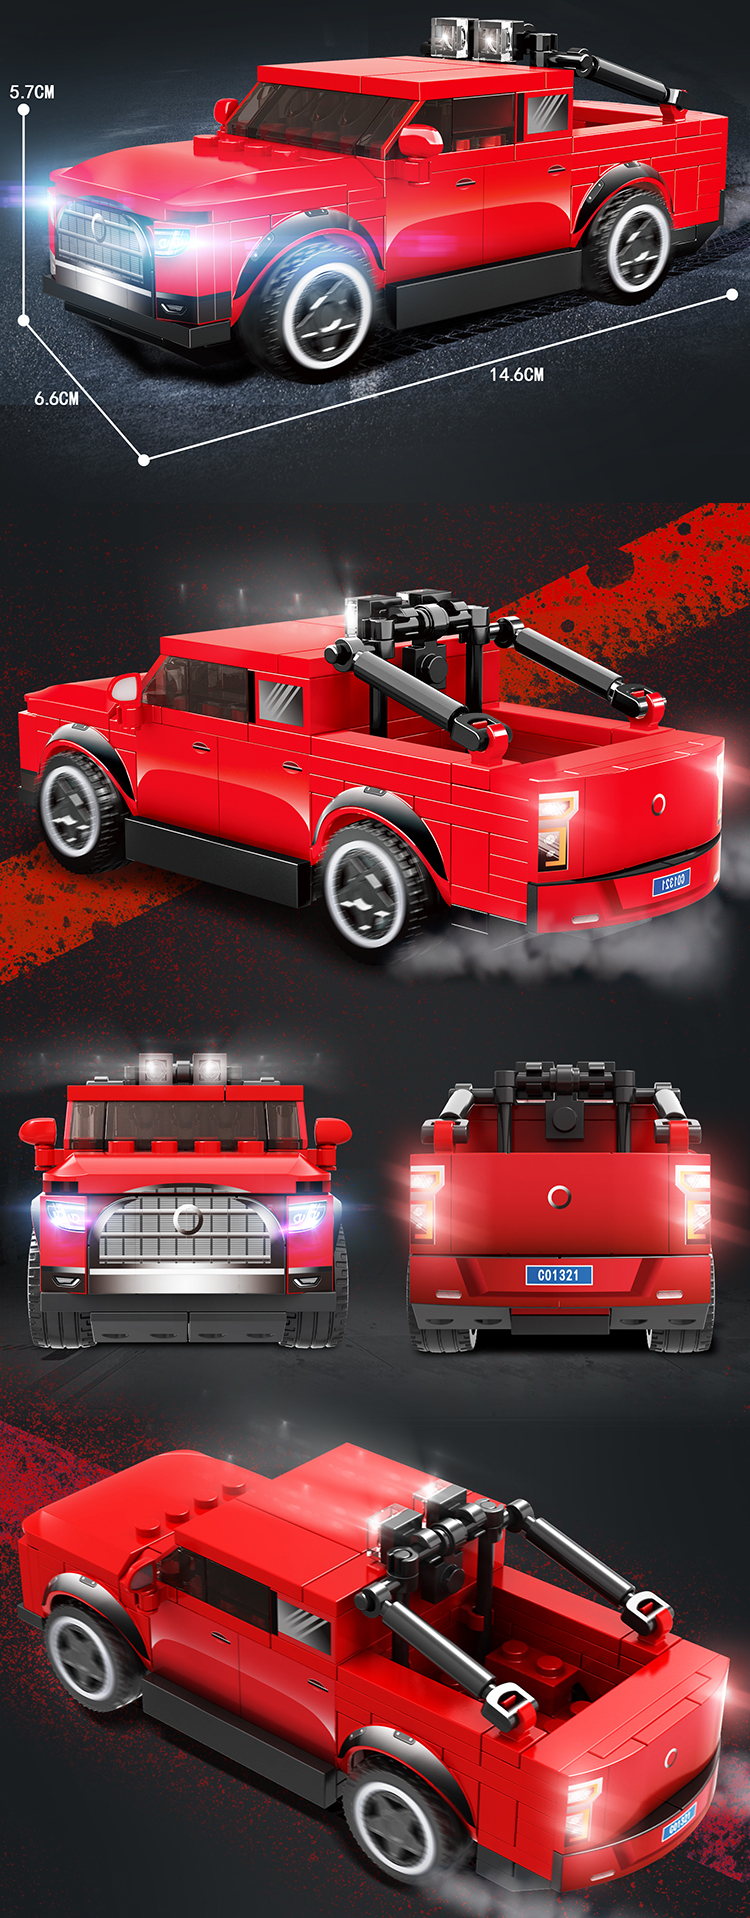 WOMA TOYS OEM ODM 1200PCS Kids Diy Bricks Racing Car Model 8 in 1 Small Building Blocks Set Construction Toy